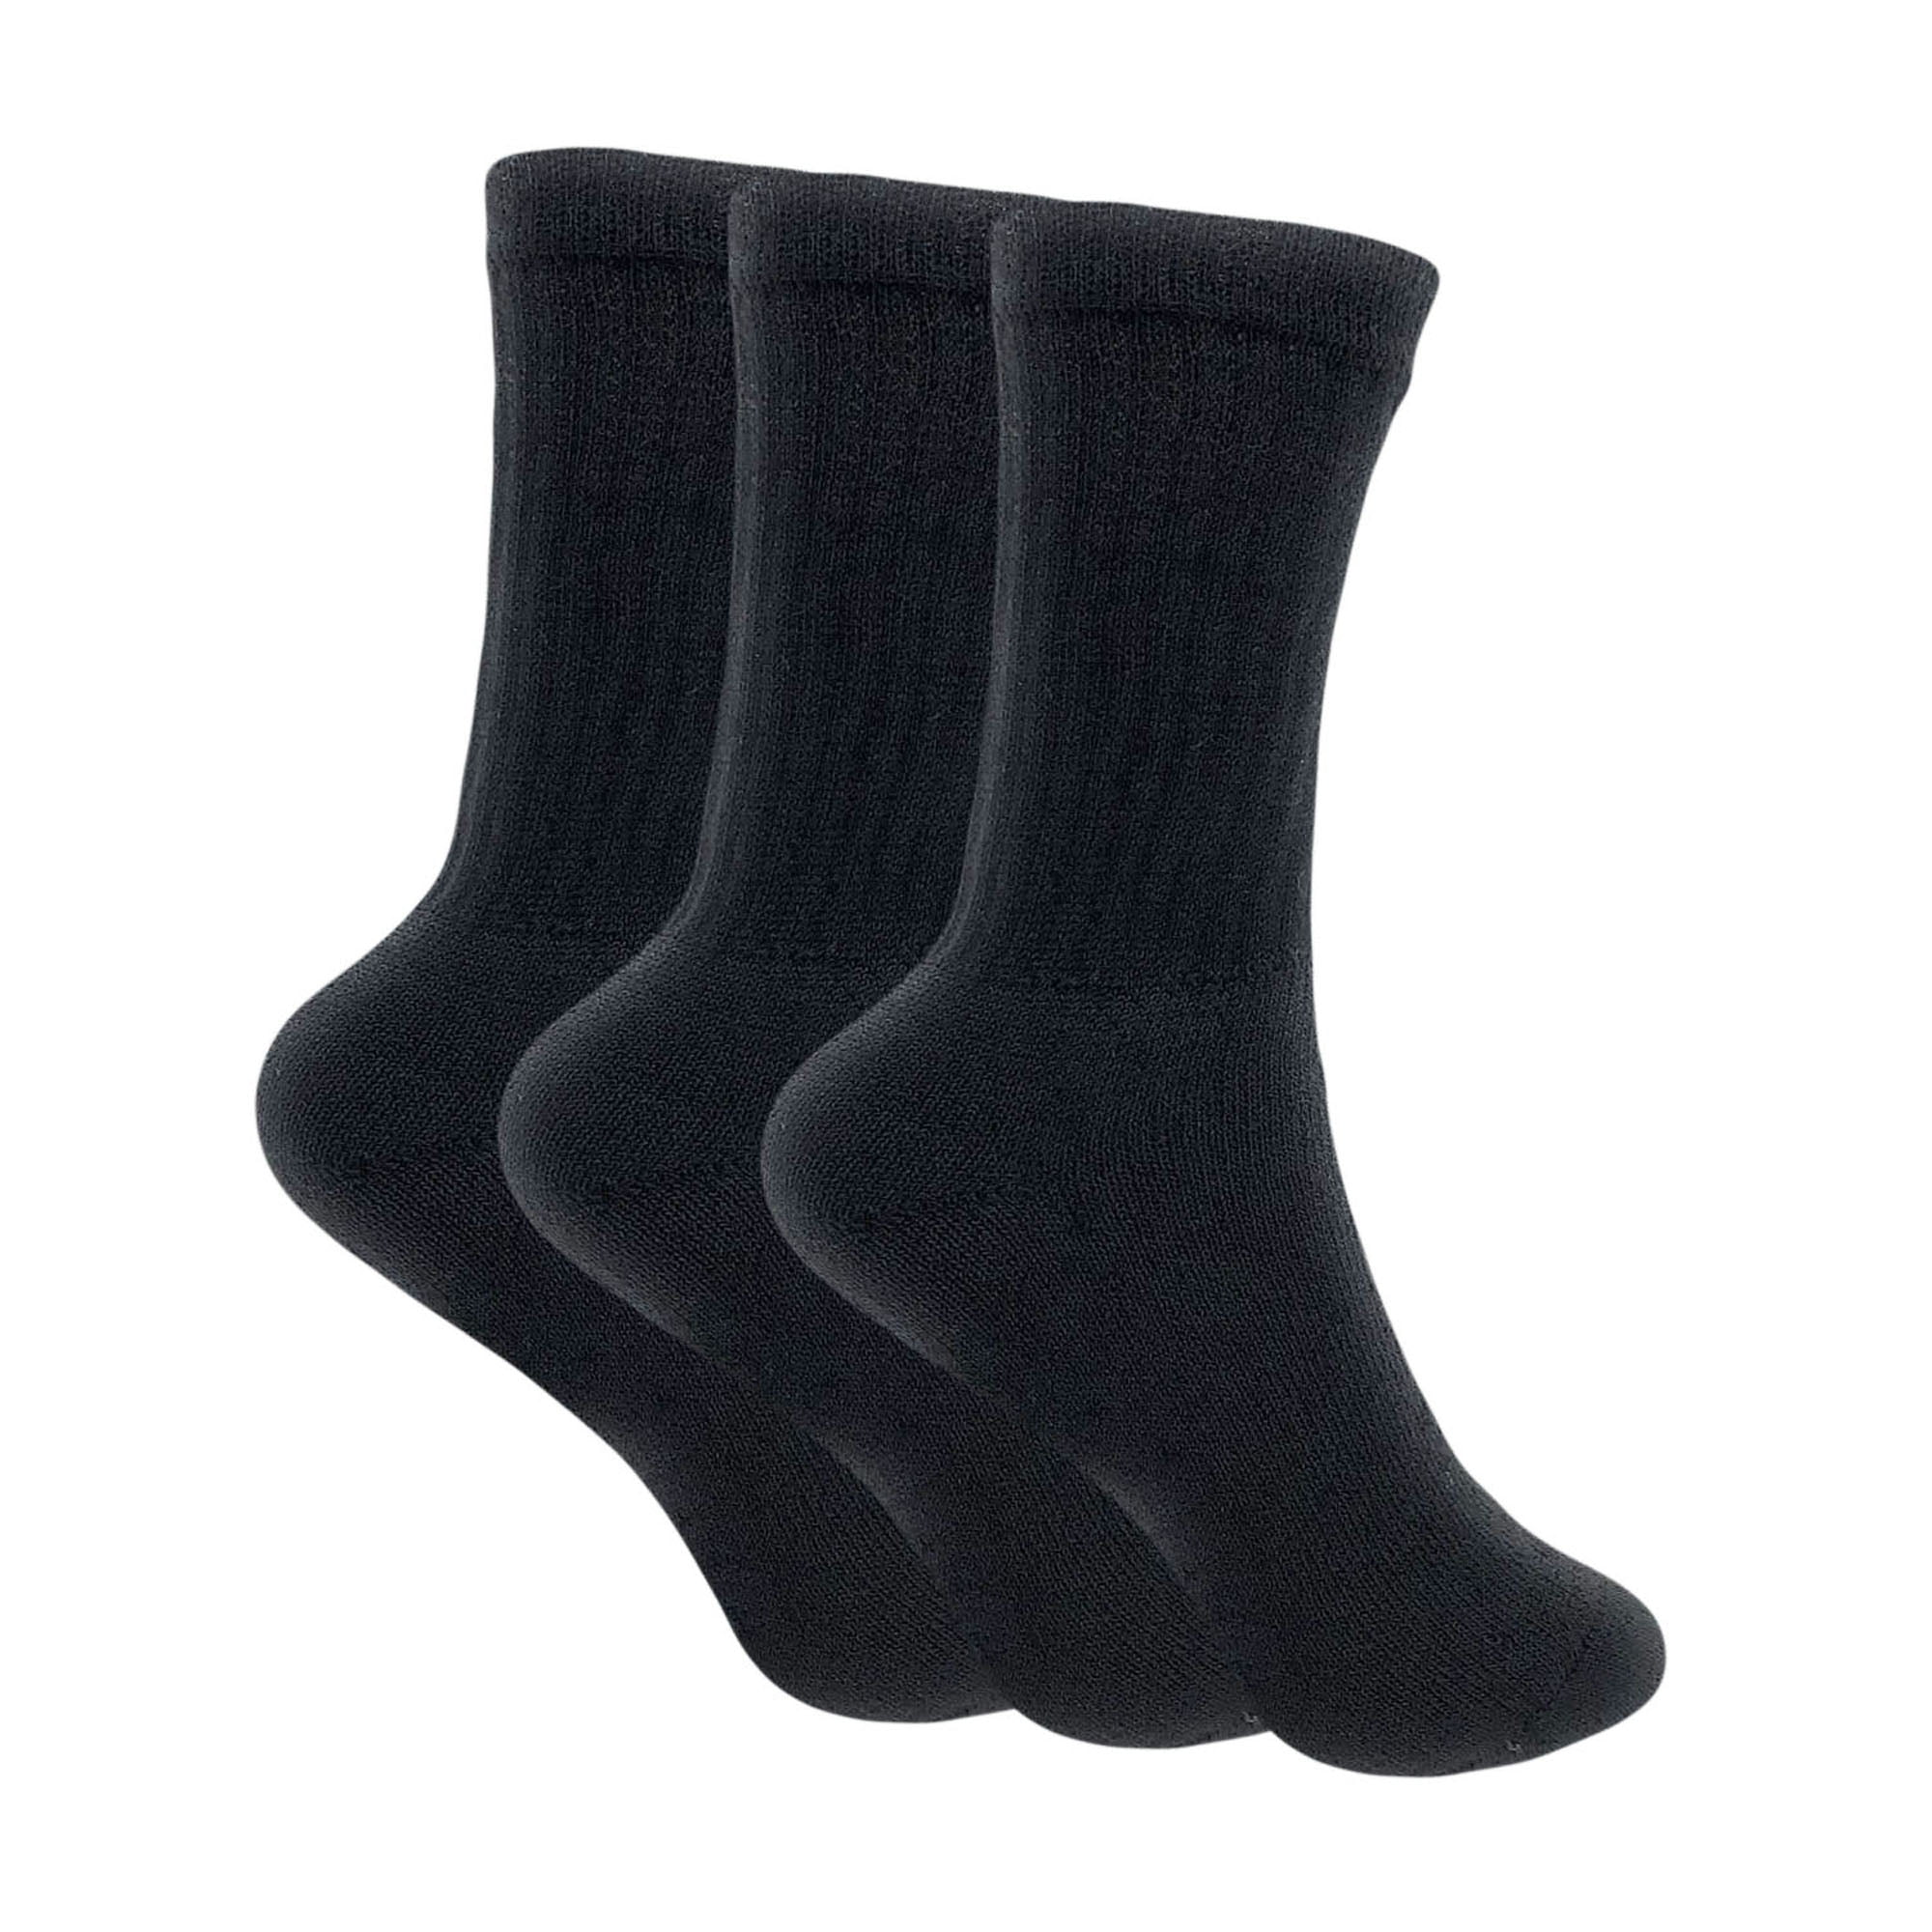 Cotton Crew Socks for Women Black 3 PAIRS Size 9-11 - Walmart.com